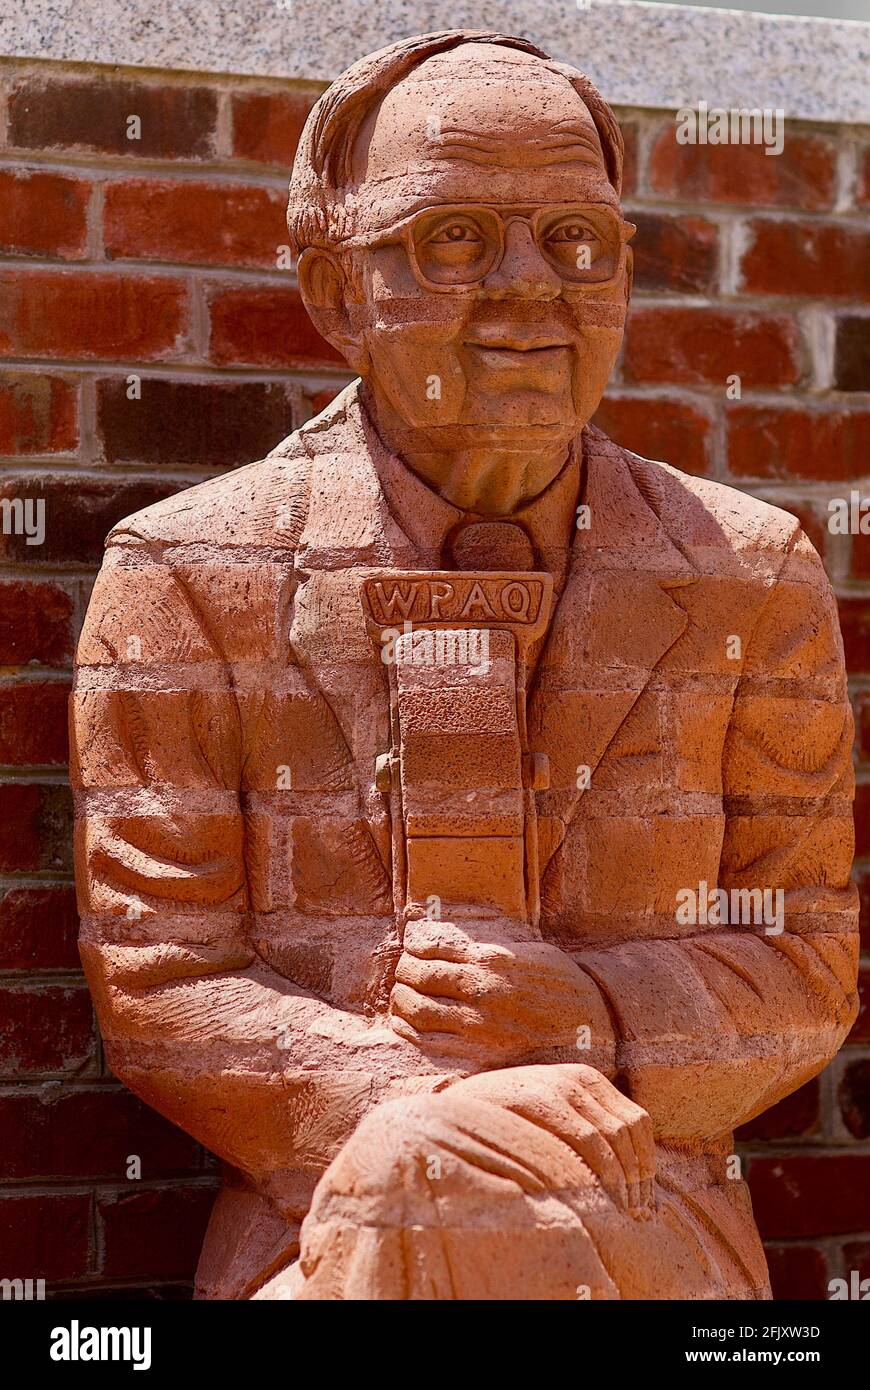 Mount Airy, North Carolina, USA - 5. Juli 2020: 'Ralph EppPerson' des Künstlers Brad Spencer ist Teil der Skulptur 'The Whittling Wall' in Mount Airy. Stockfoto